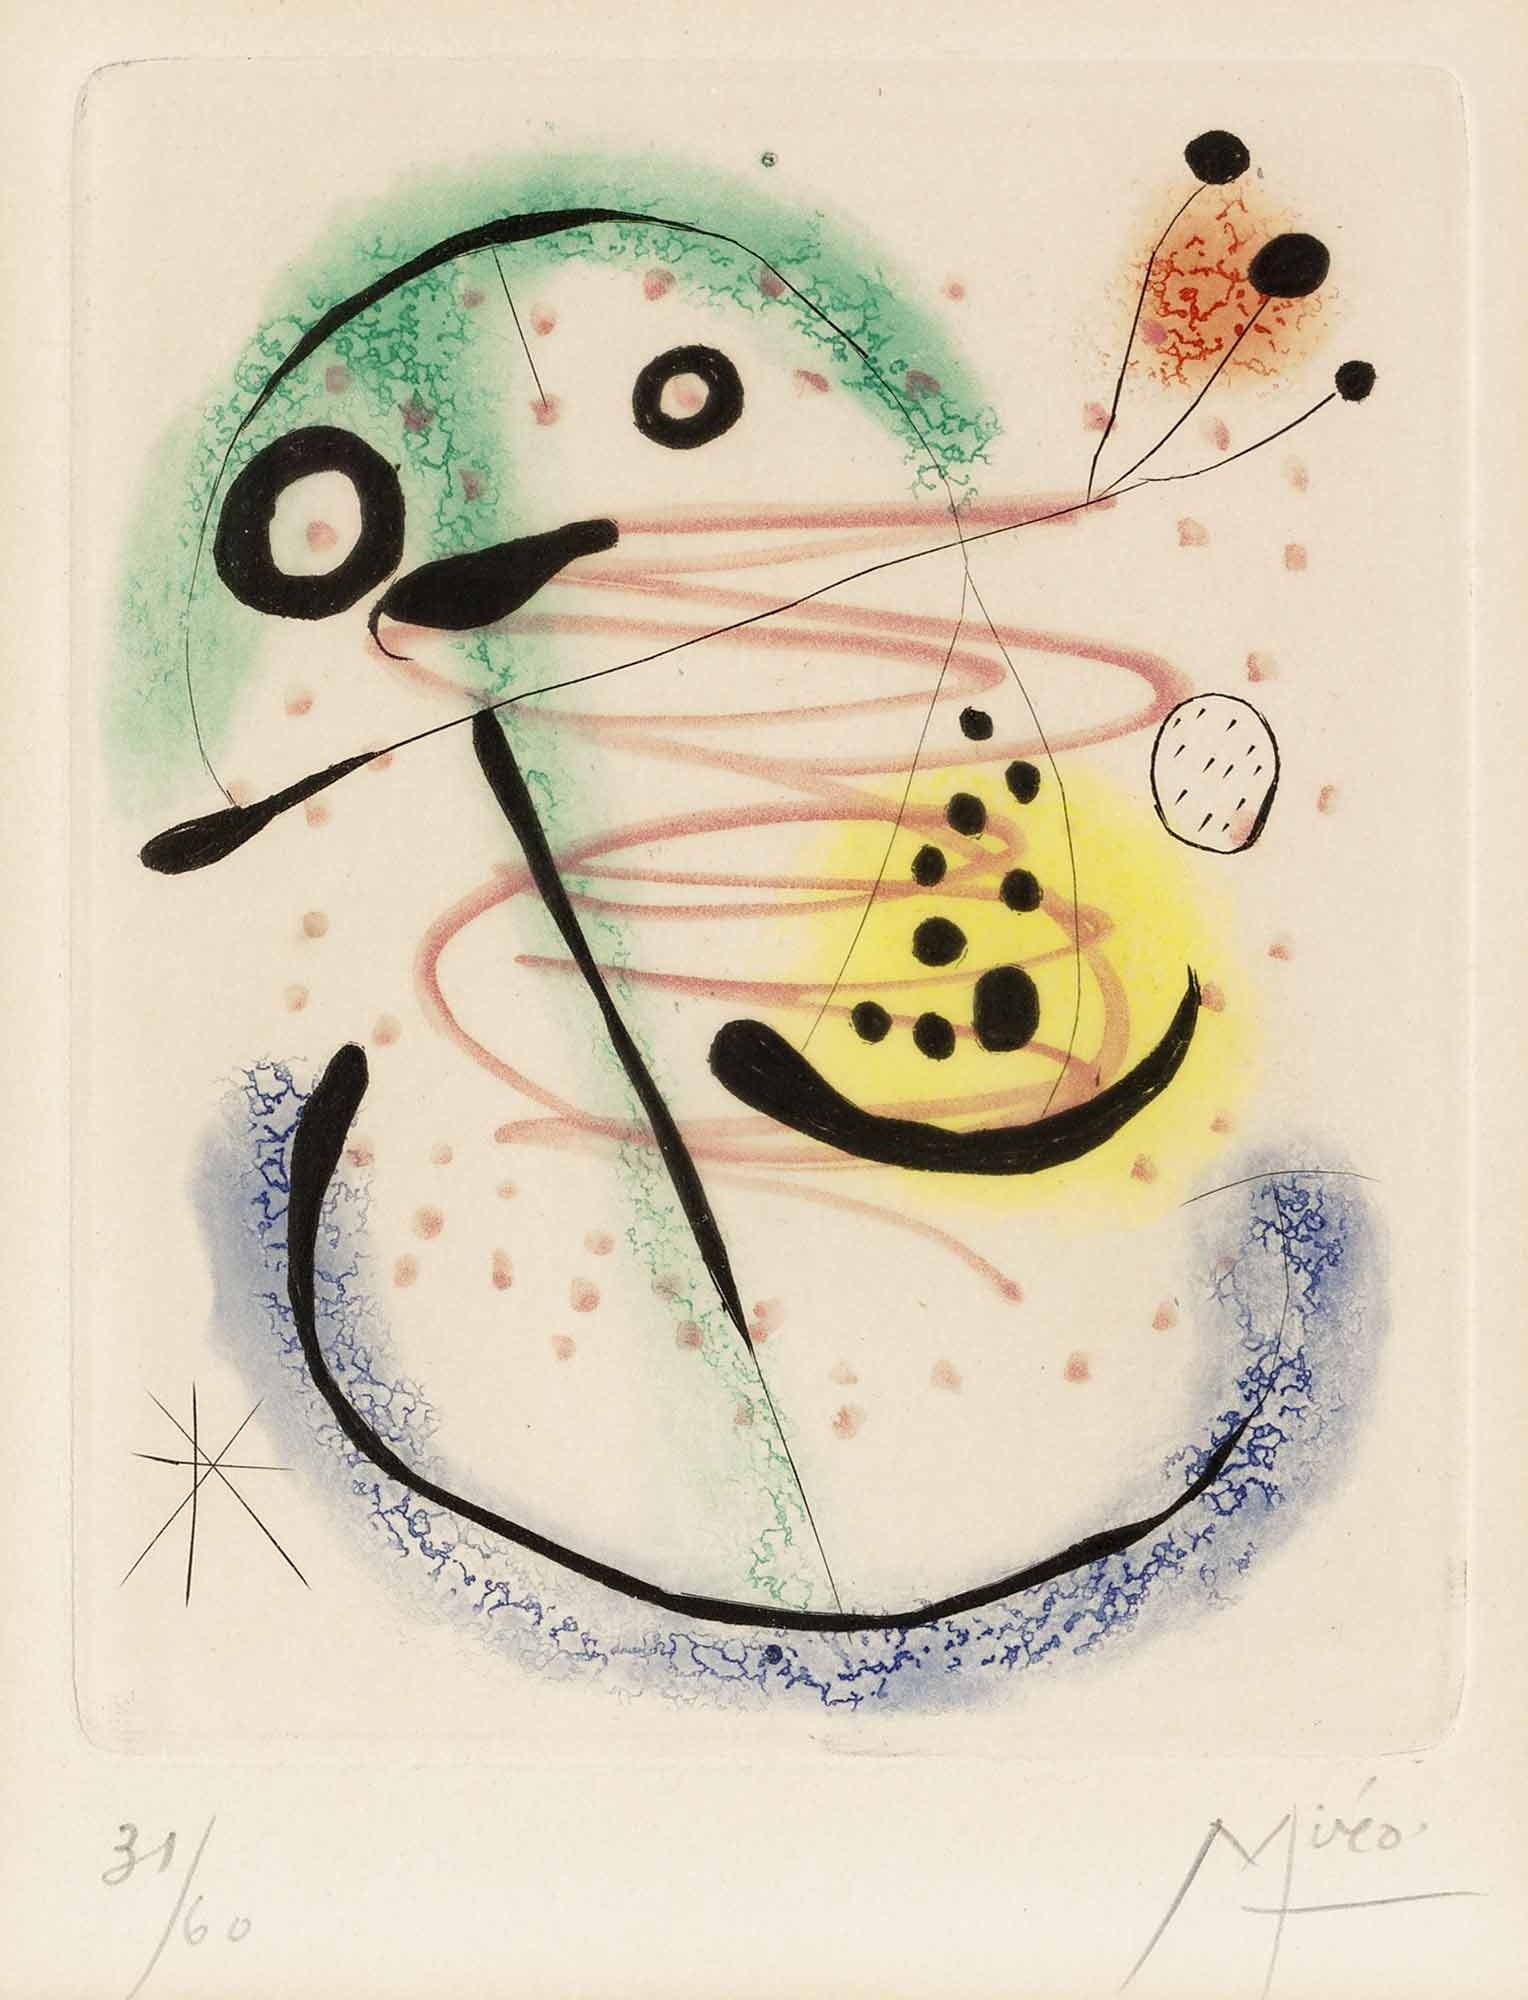 UTAN TITEL, UR: LA BAGUE D'AURORE by Joan Miró, 1957